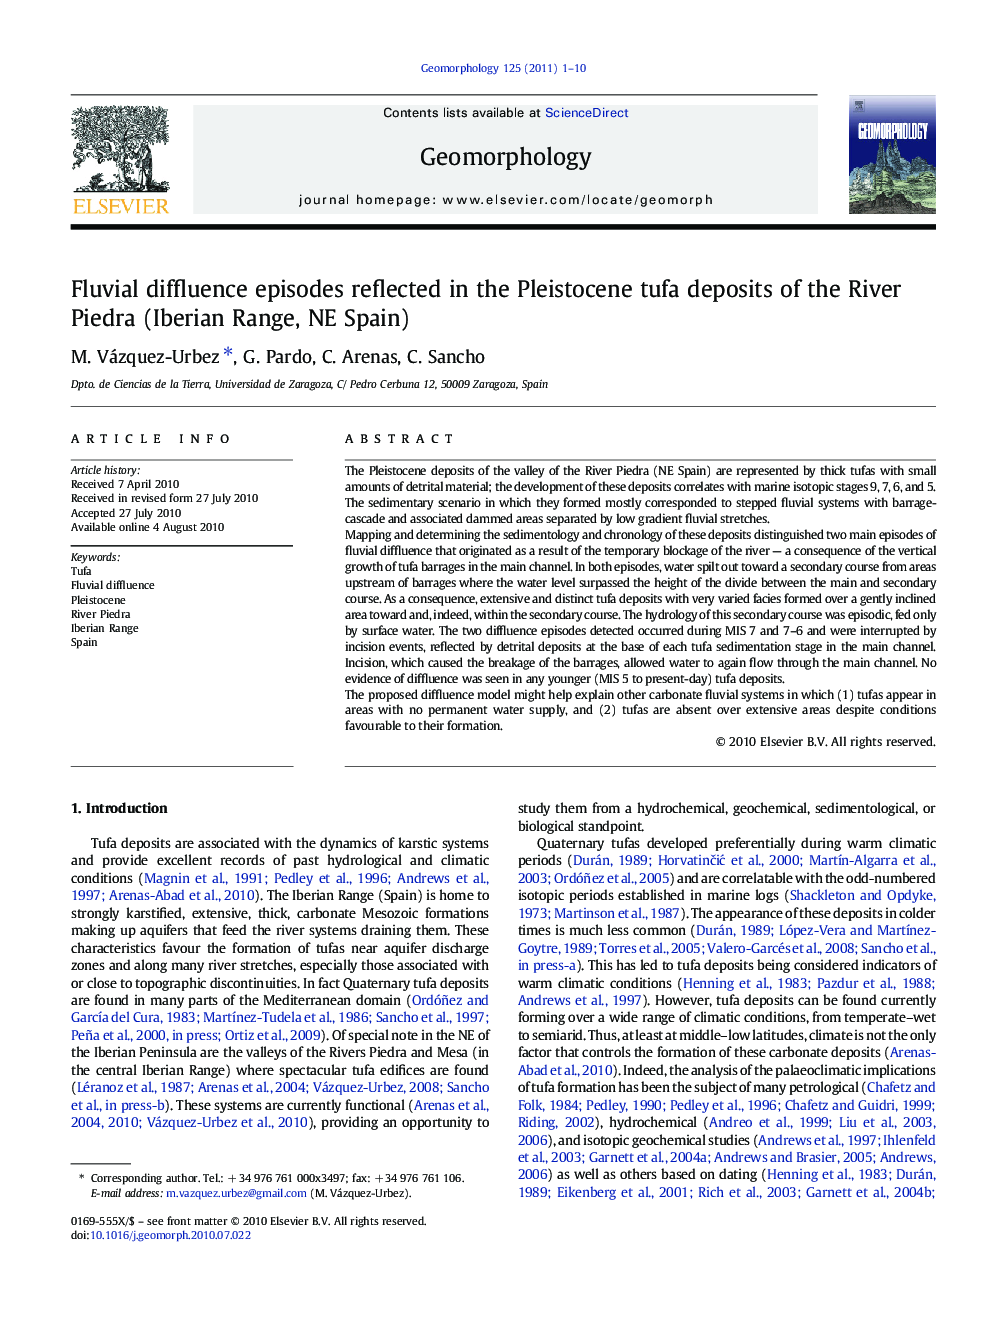 Fluvial diffluence episodes reflected in the Pleistocene tufa deposits of the River Piedra (Iberian Range, NE Spain)